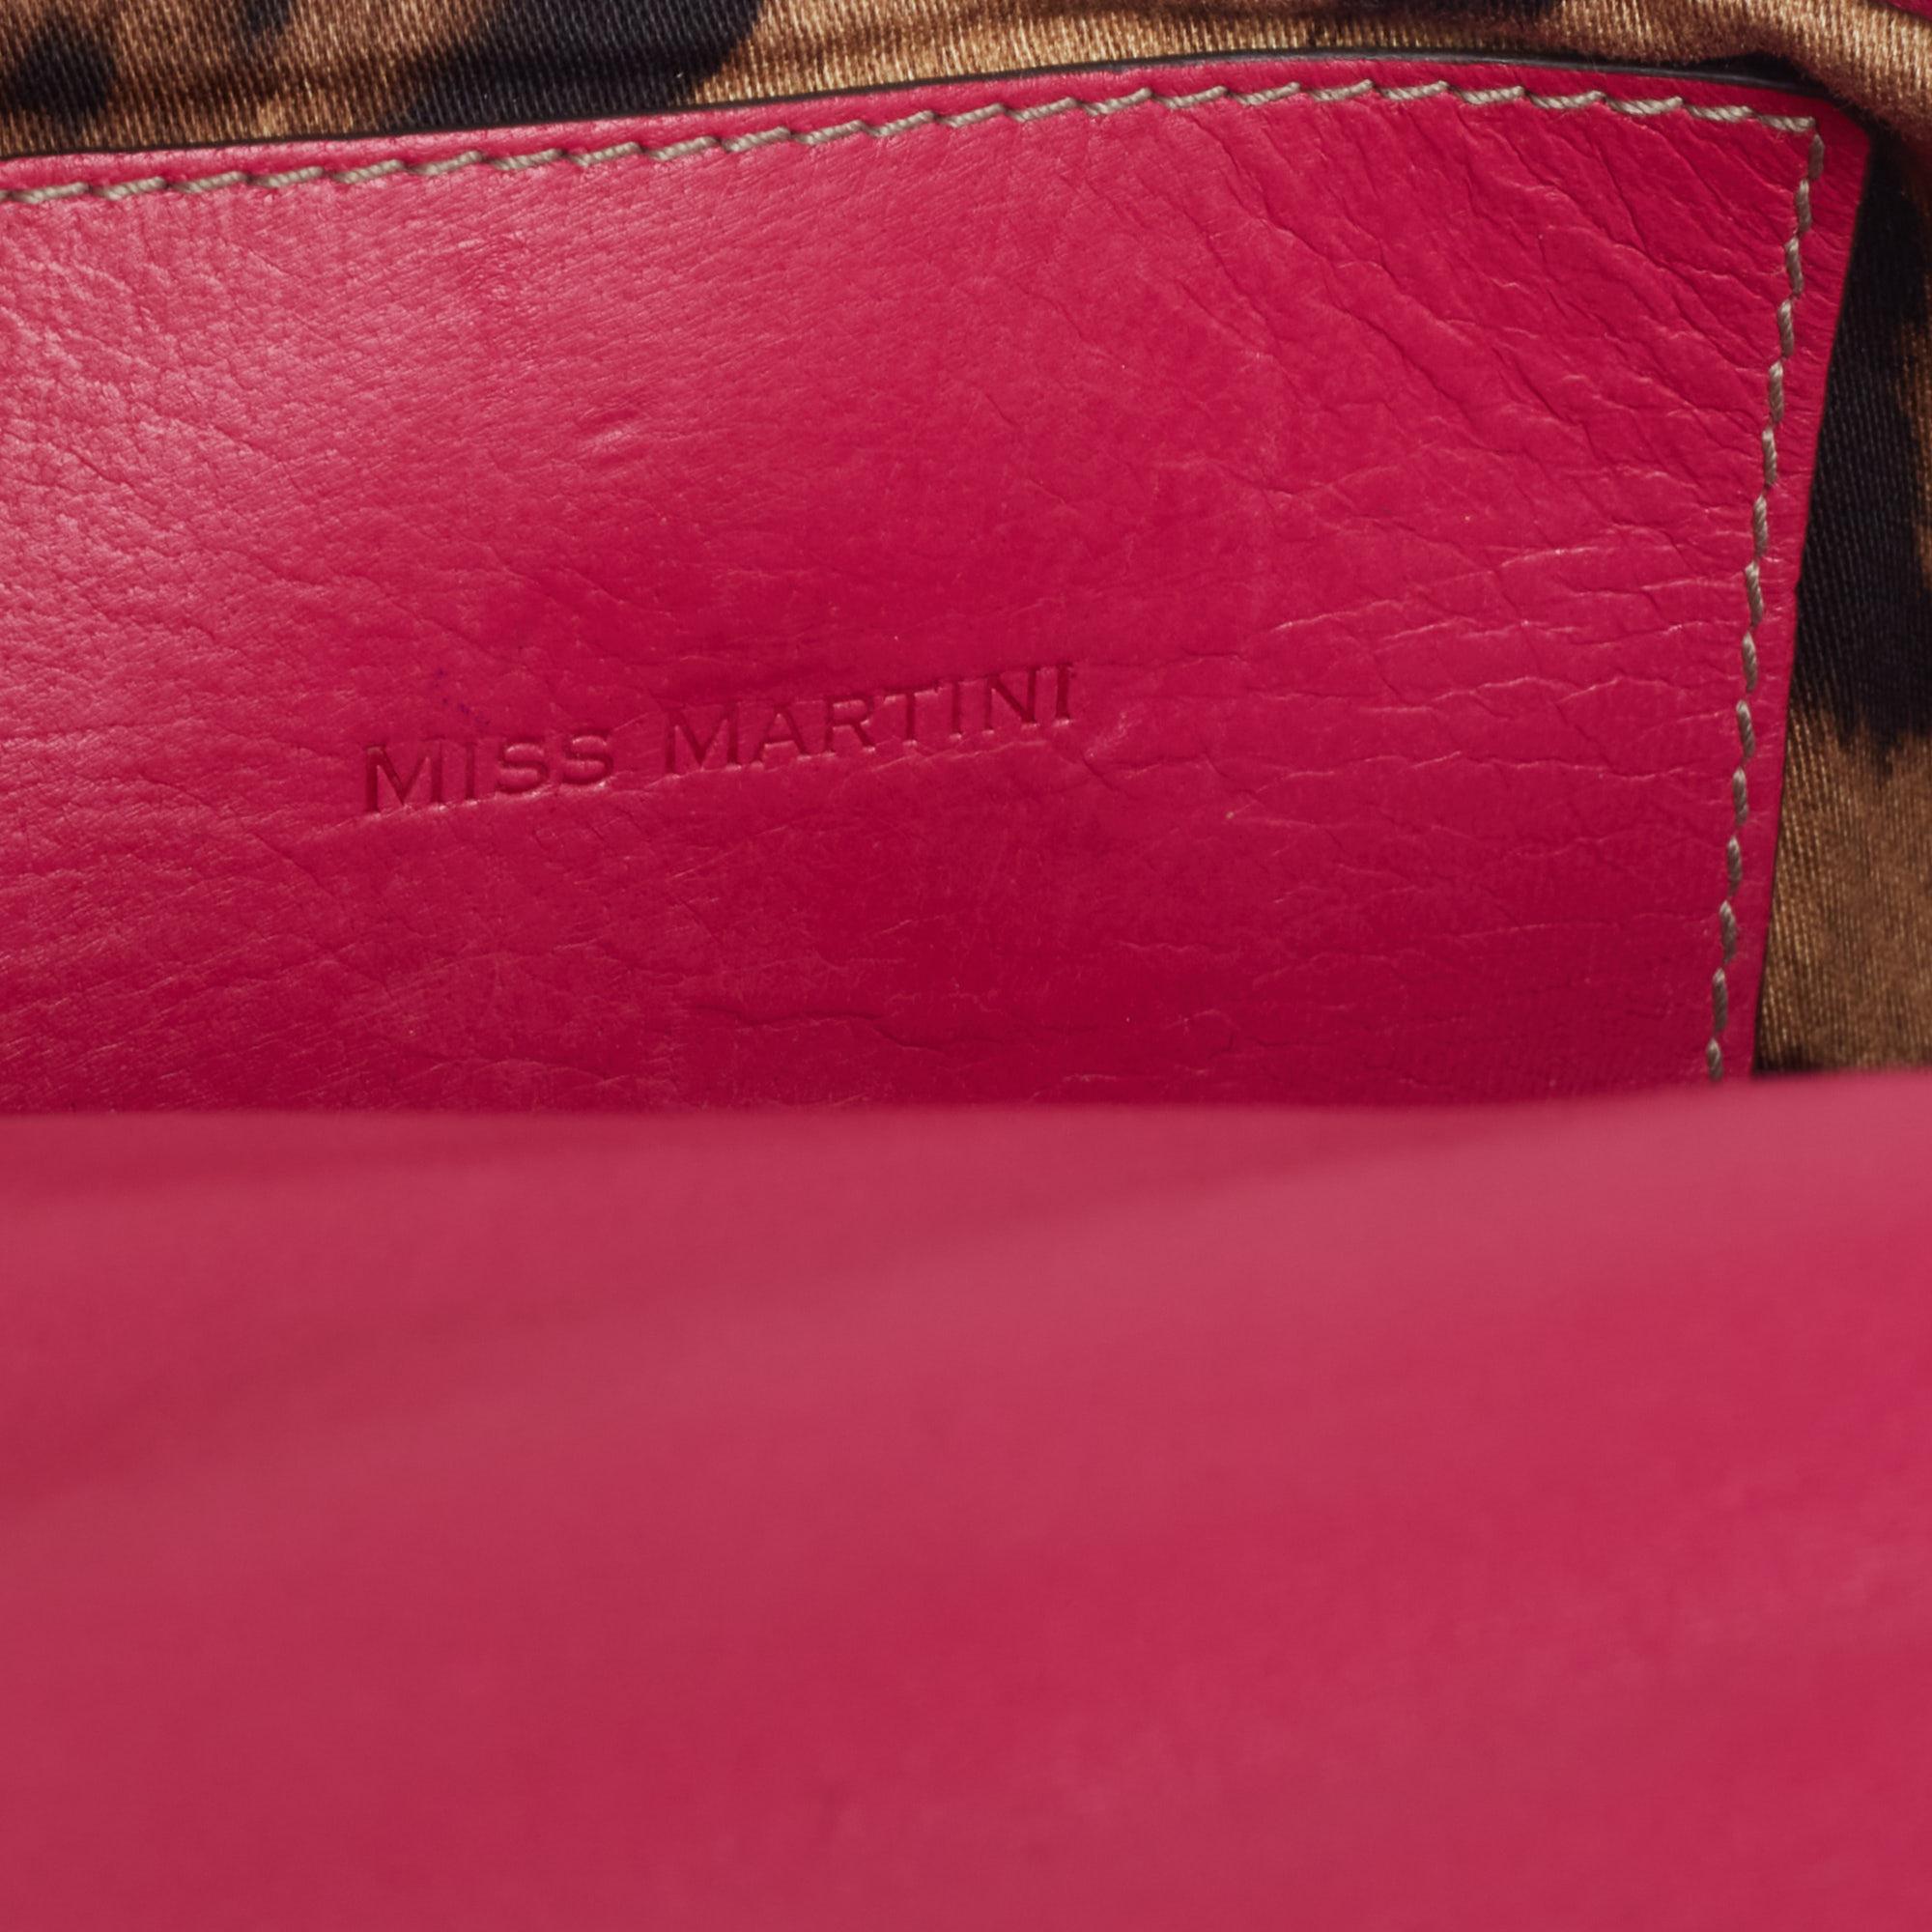 Dolce & Gabbana Pink Patent Leather Miss Martini Shoulder Bag 3